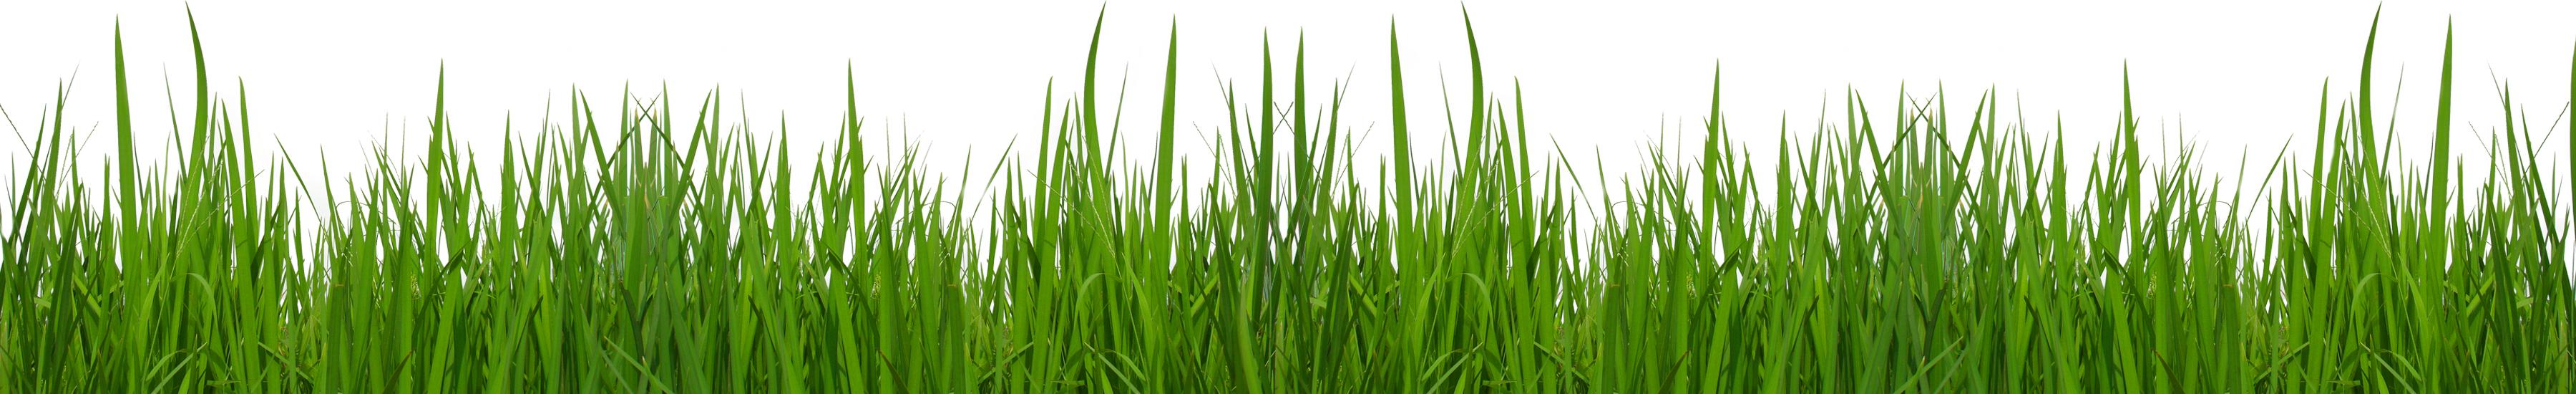 transparent grass clipart free clip art image id 